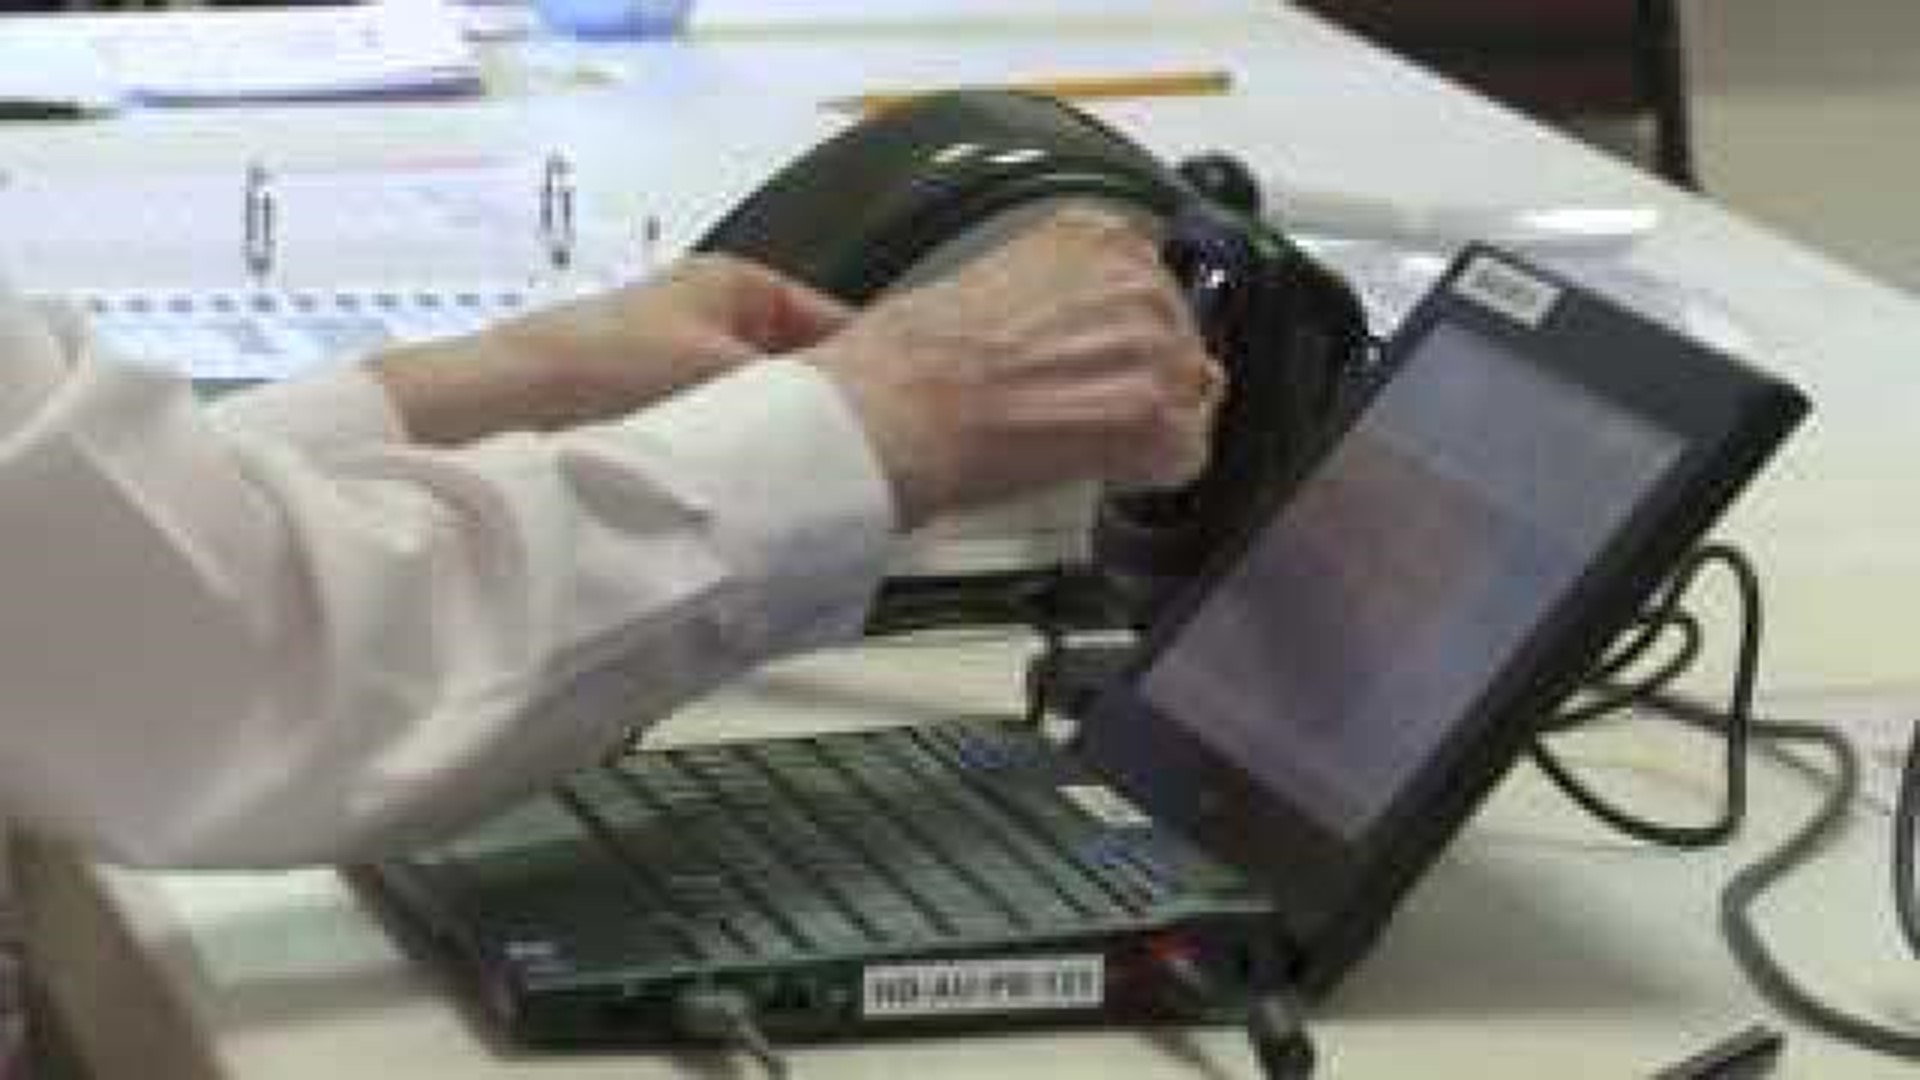 Scott County tests new voter identification scanner